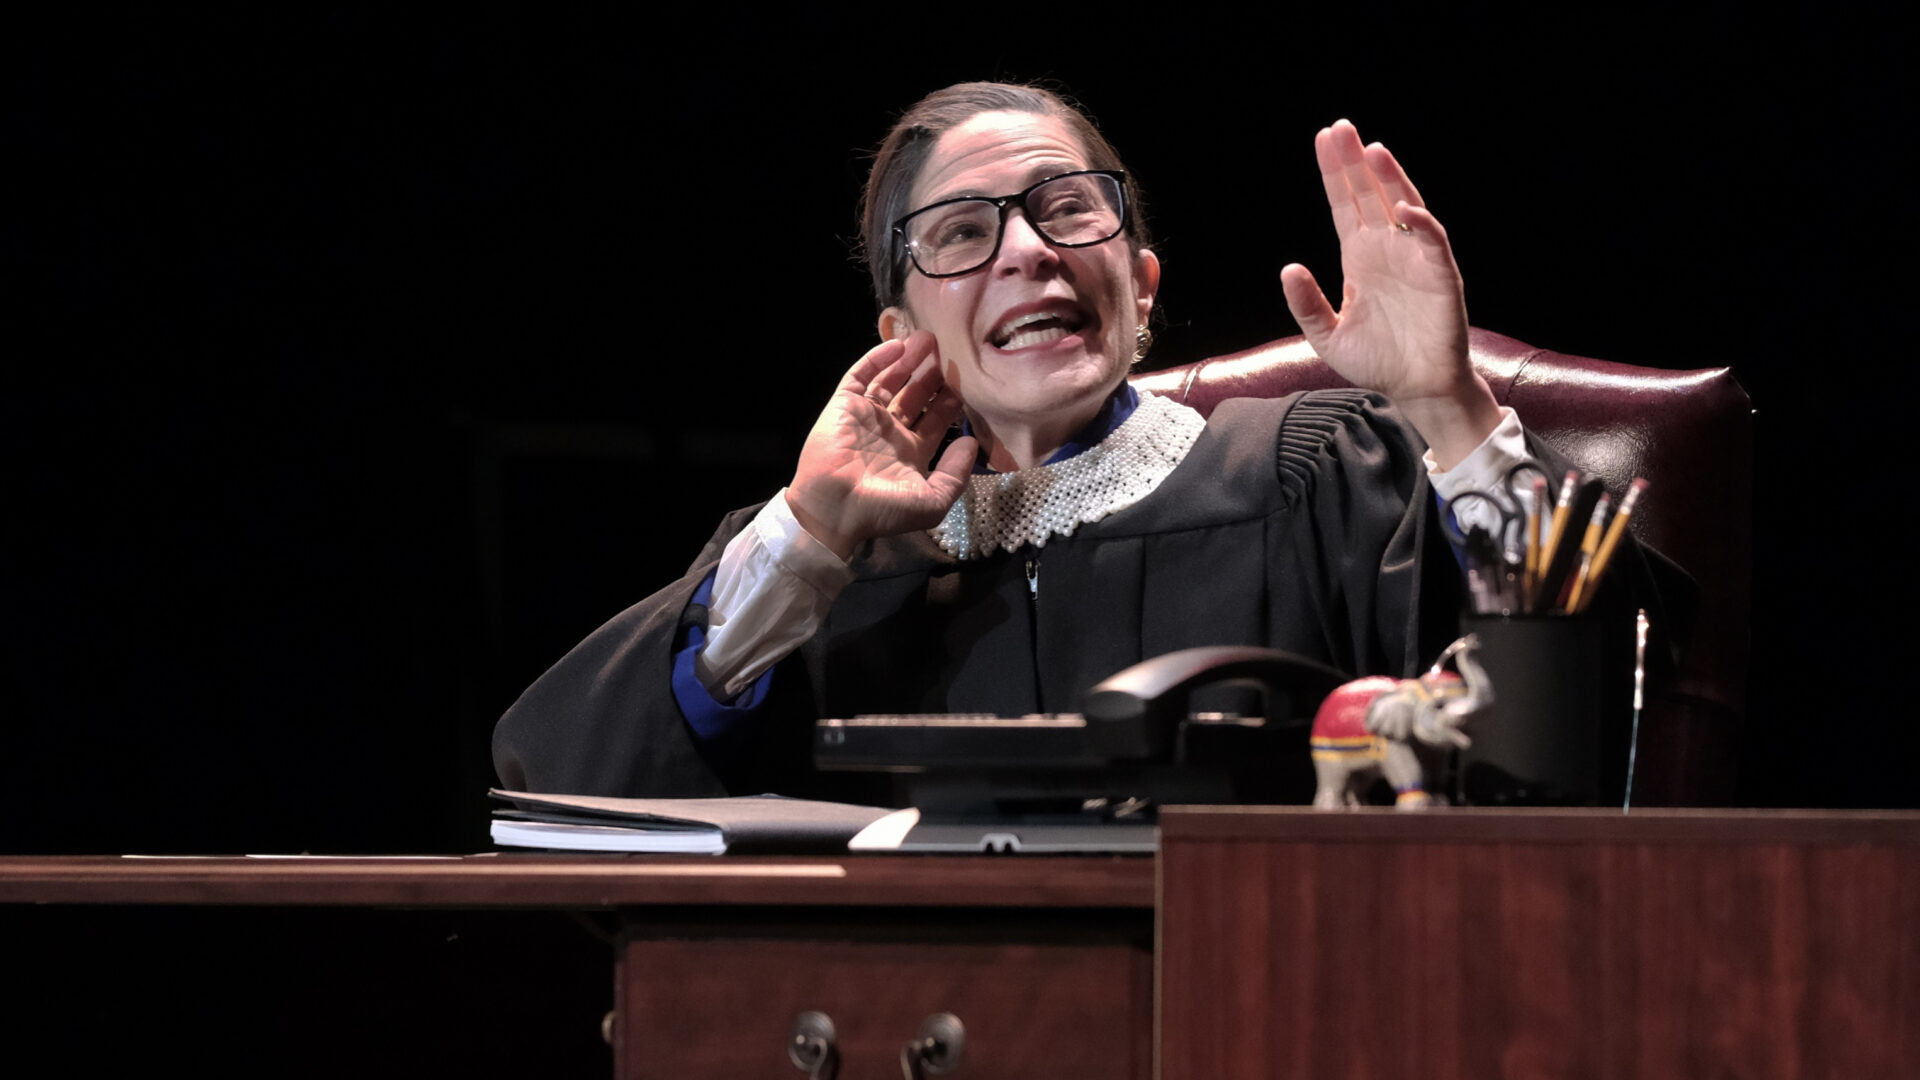 All Things Equal – The Life & Trials of Ruth Bader Ginsburg